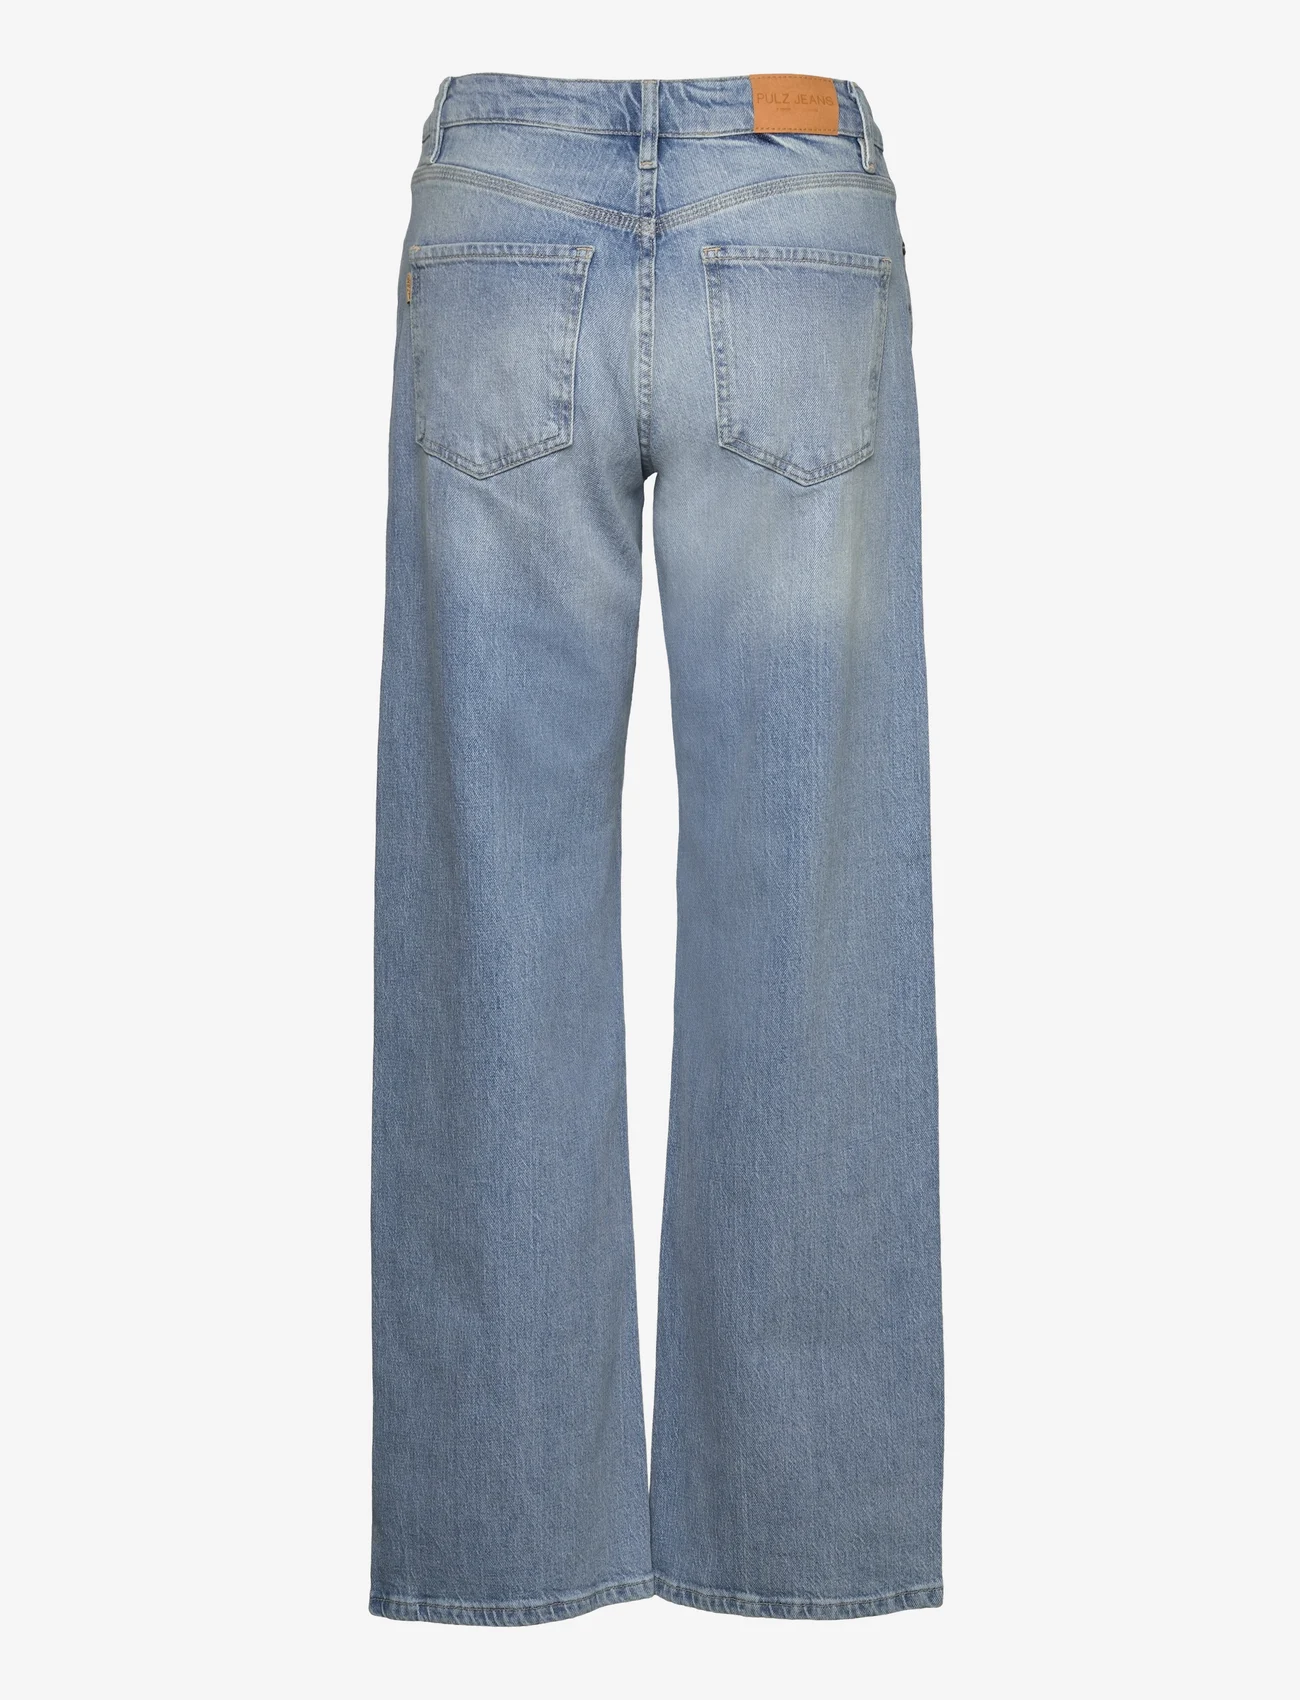 Pulz Jeans - PZVEGA HW Jeans Wide Leg - brede jeans - light blue denim - 1